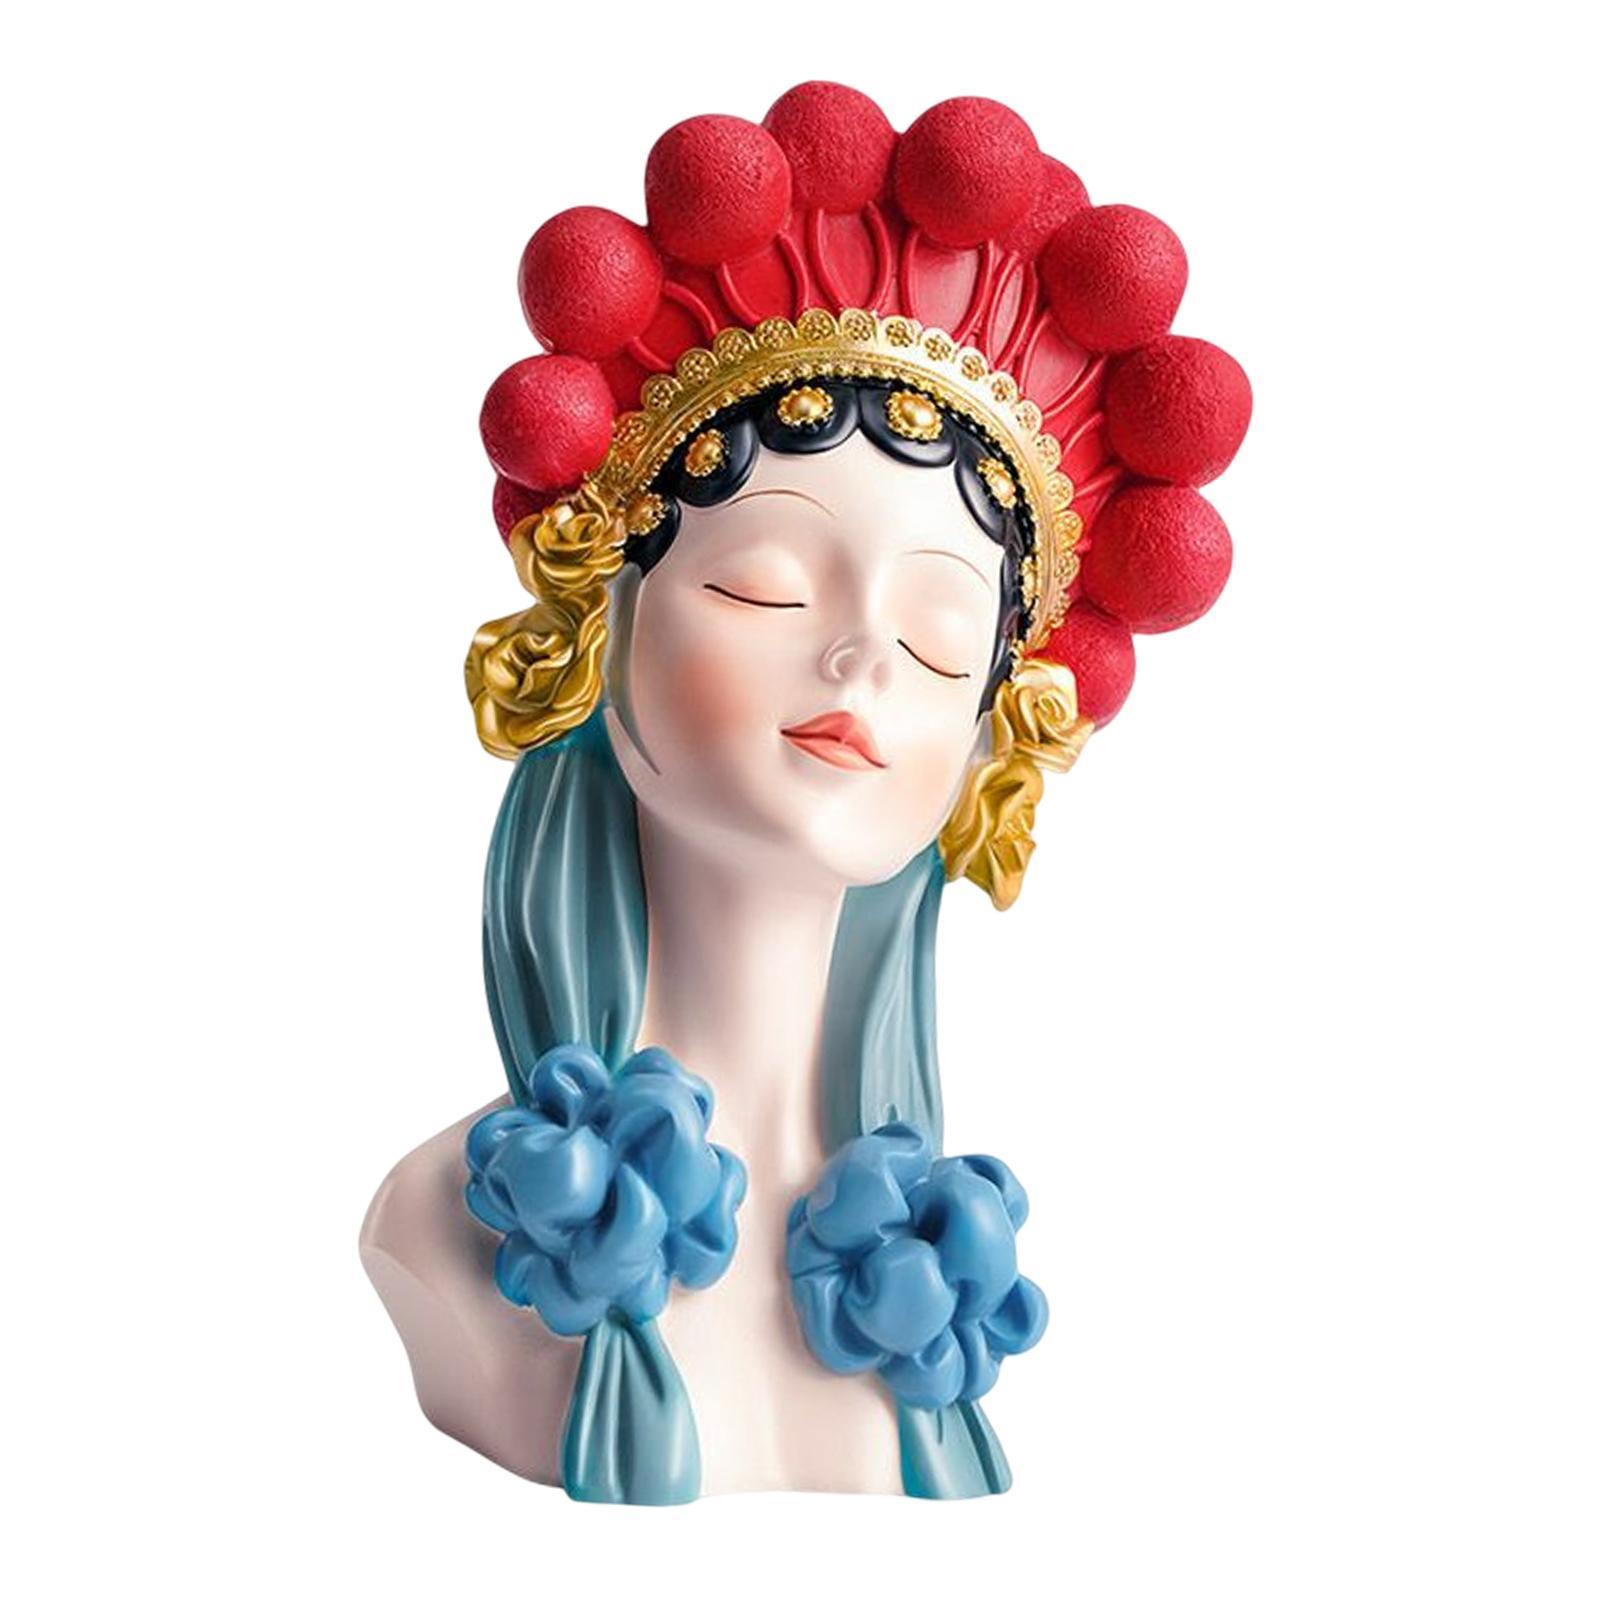 Opera Girls Statue Ornament Handicraft Resin Craft Chinese Traditional Girls Figurine for Office Desktop Bedroom Cabinet Decor